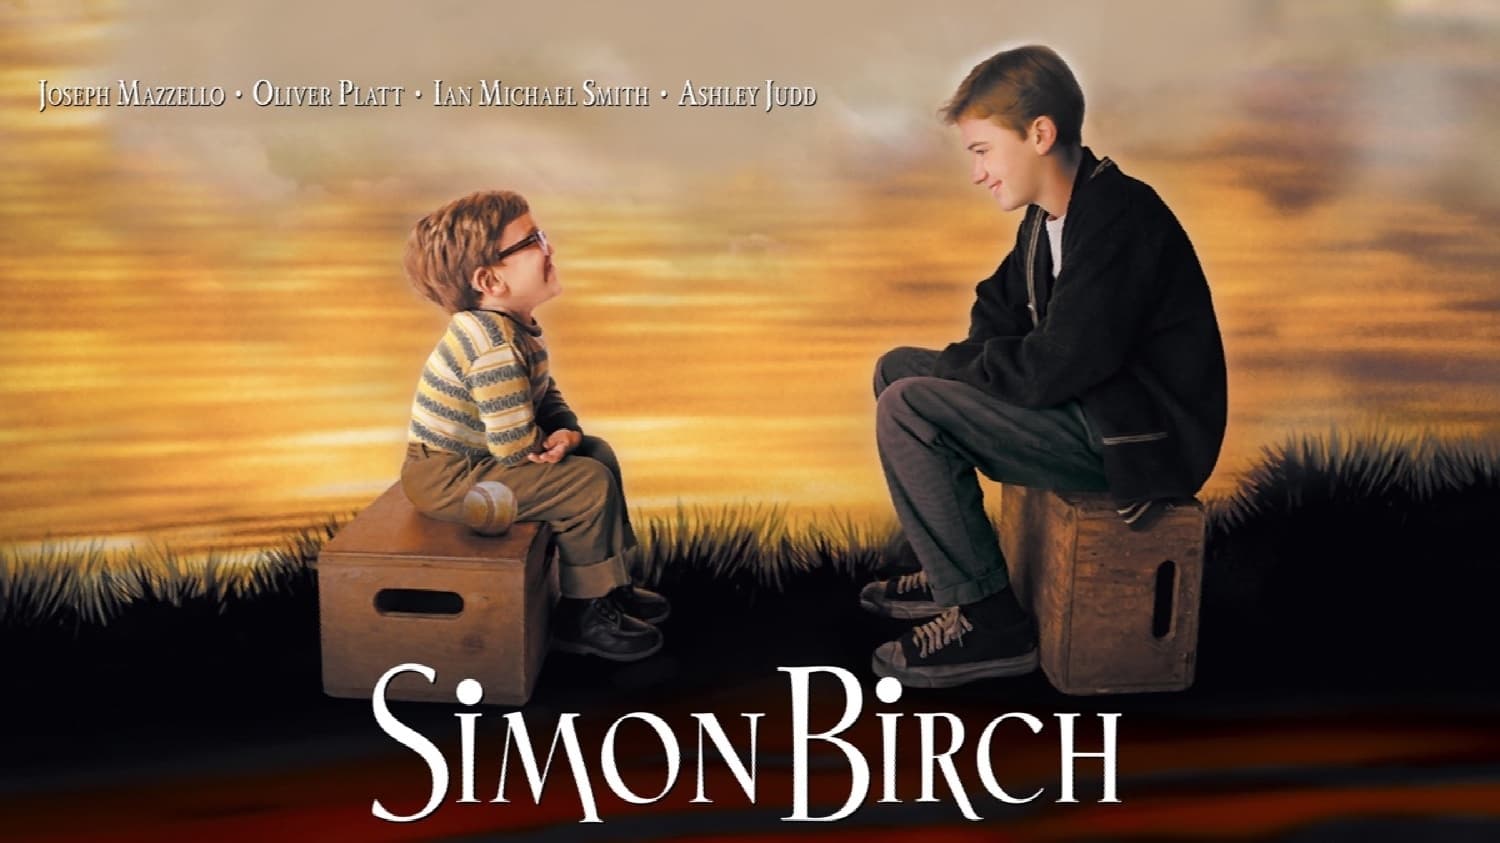 Ett litet mirakel - Simon Birch (1998)